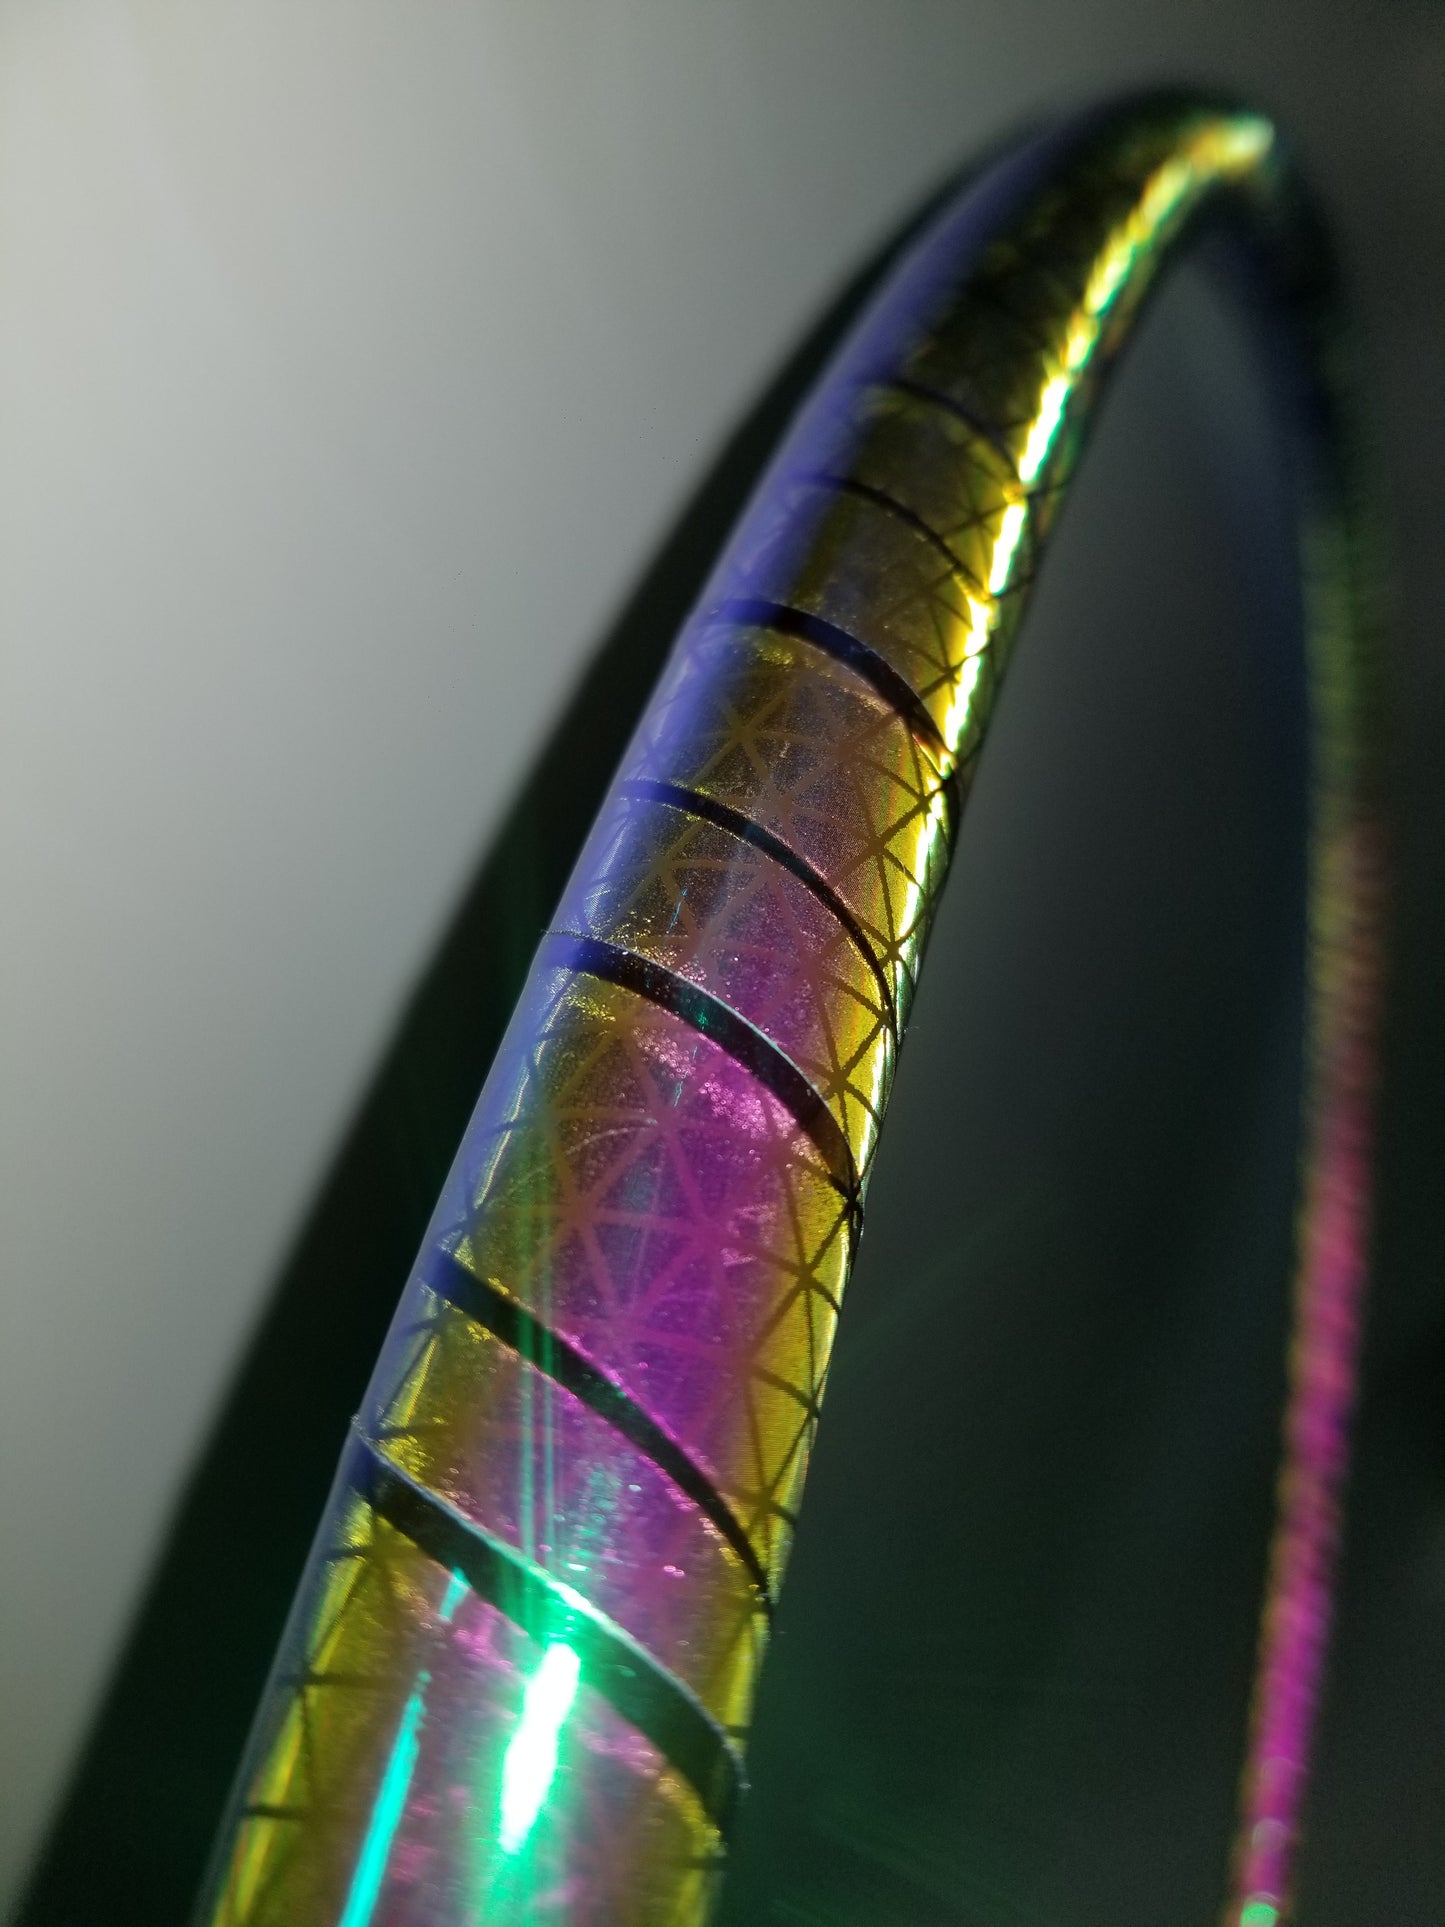 Purple Haze Reflective Color Morph Taped Hoop